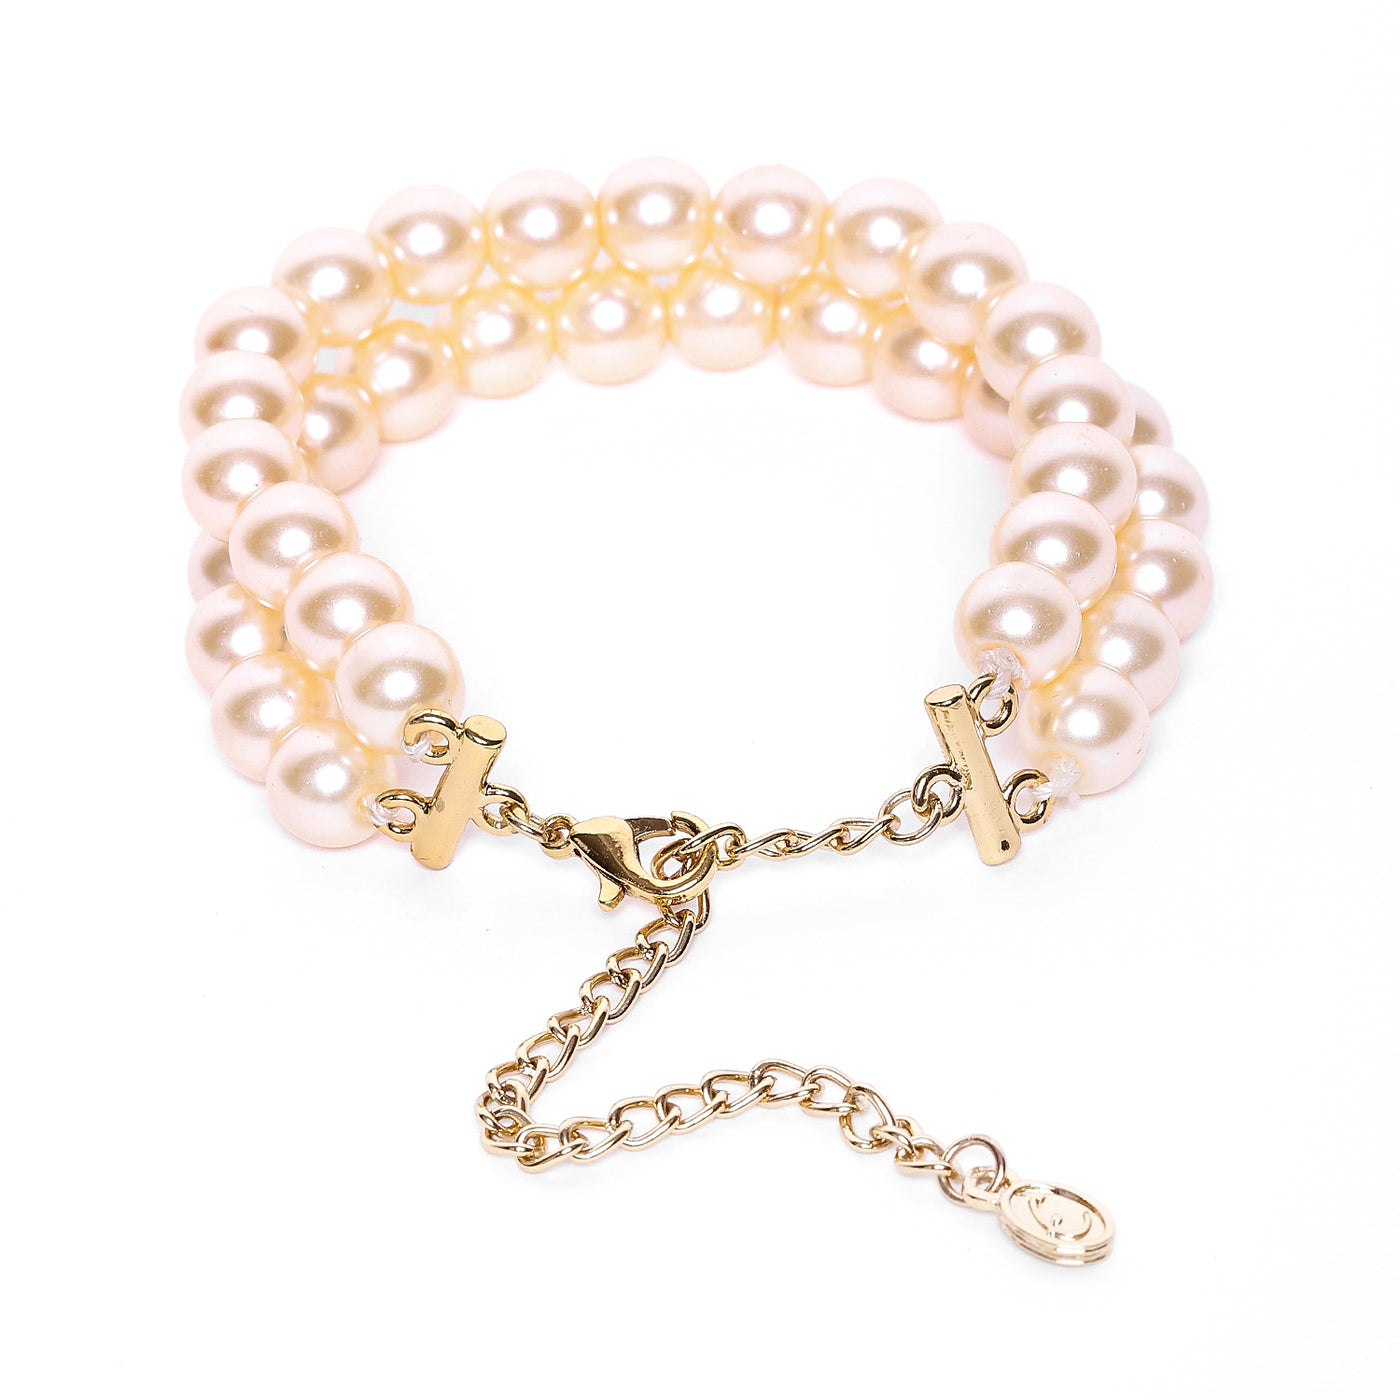 Estele Gold Plated - Creamy Pearl double line Bracelet